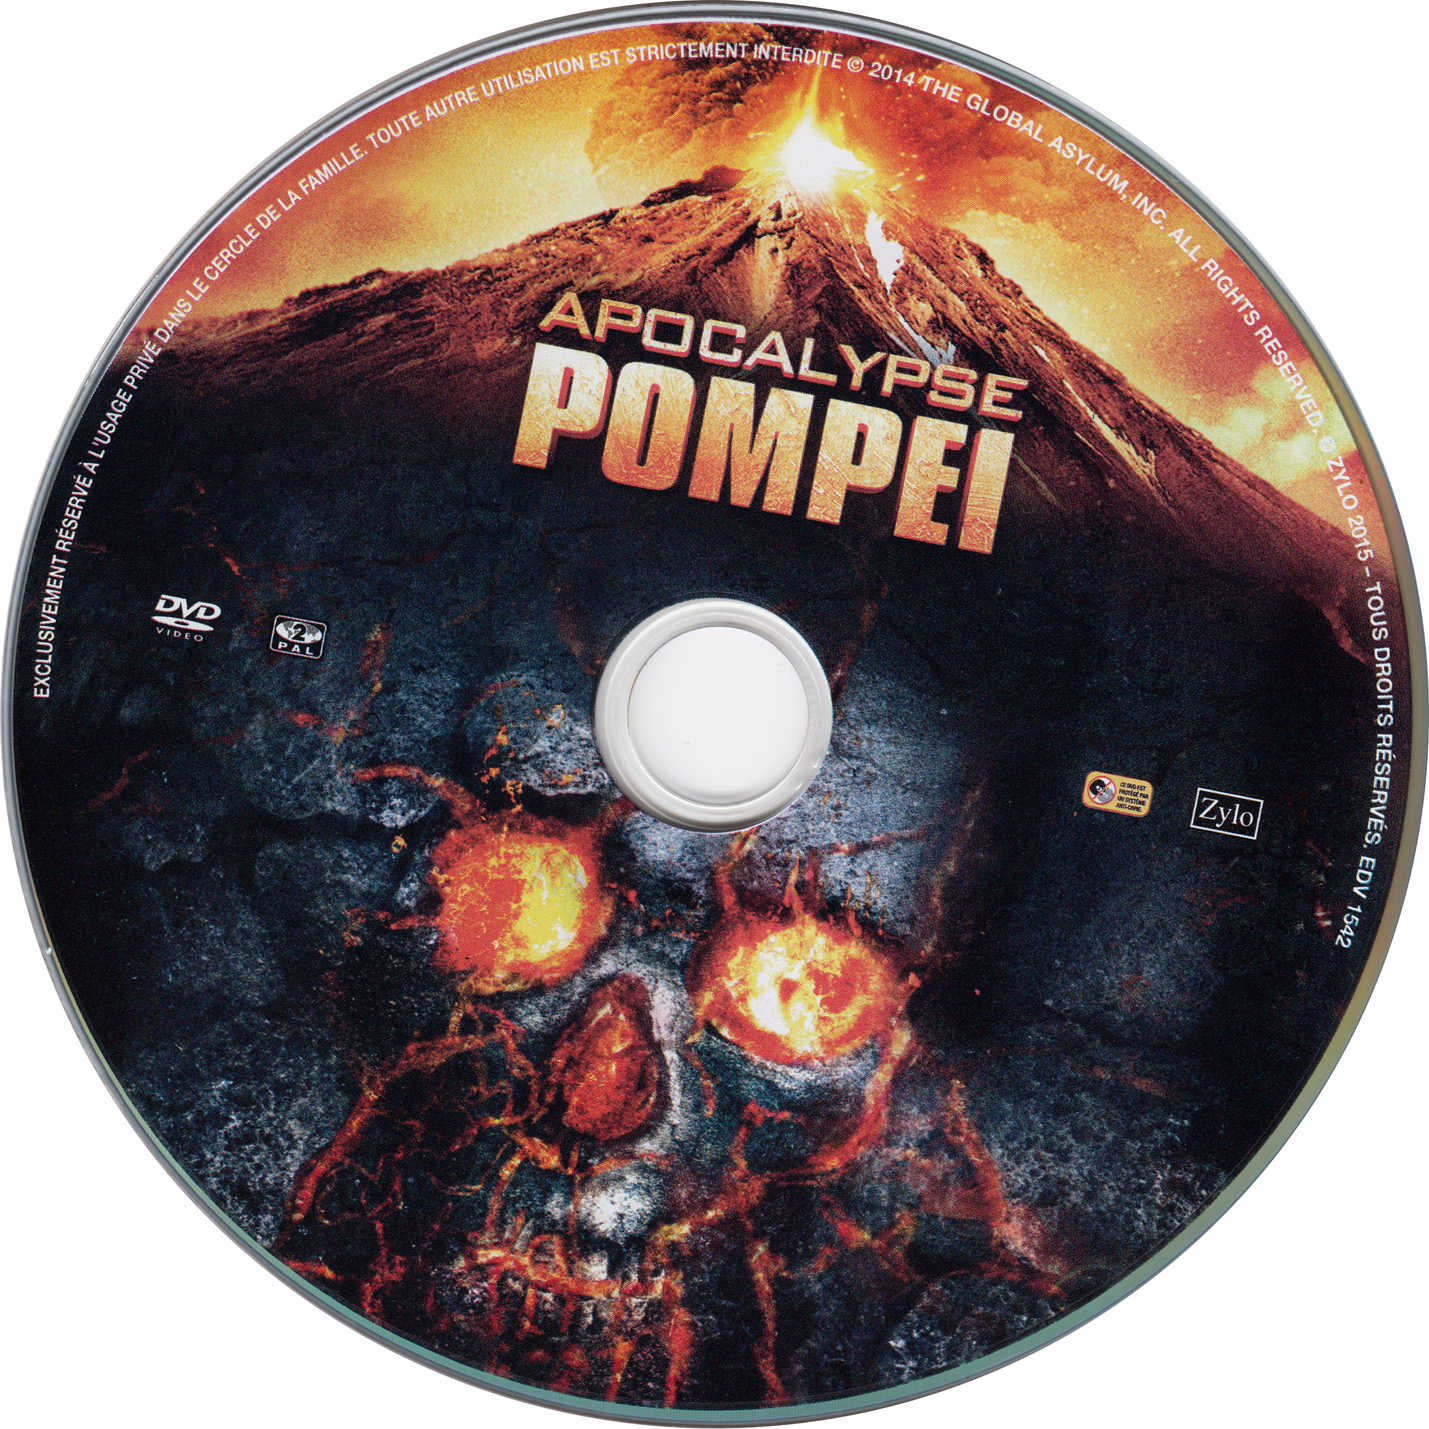 Apocalypse pompei